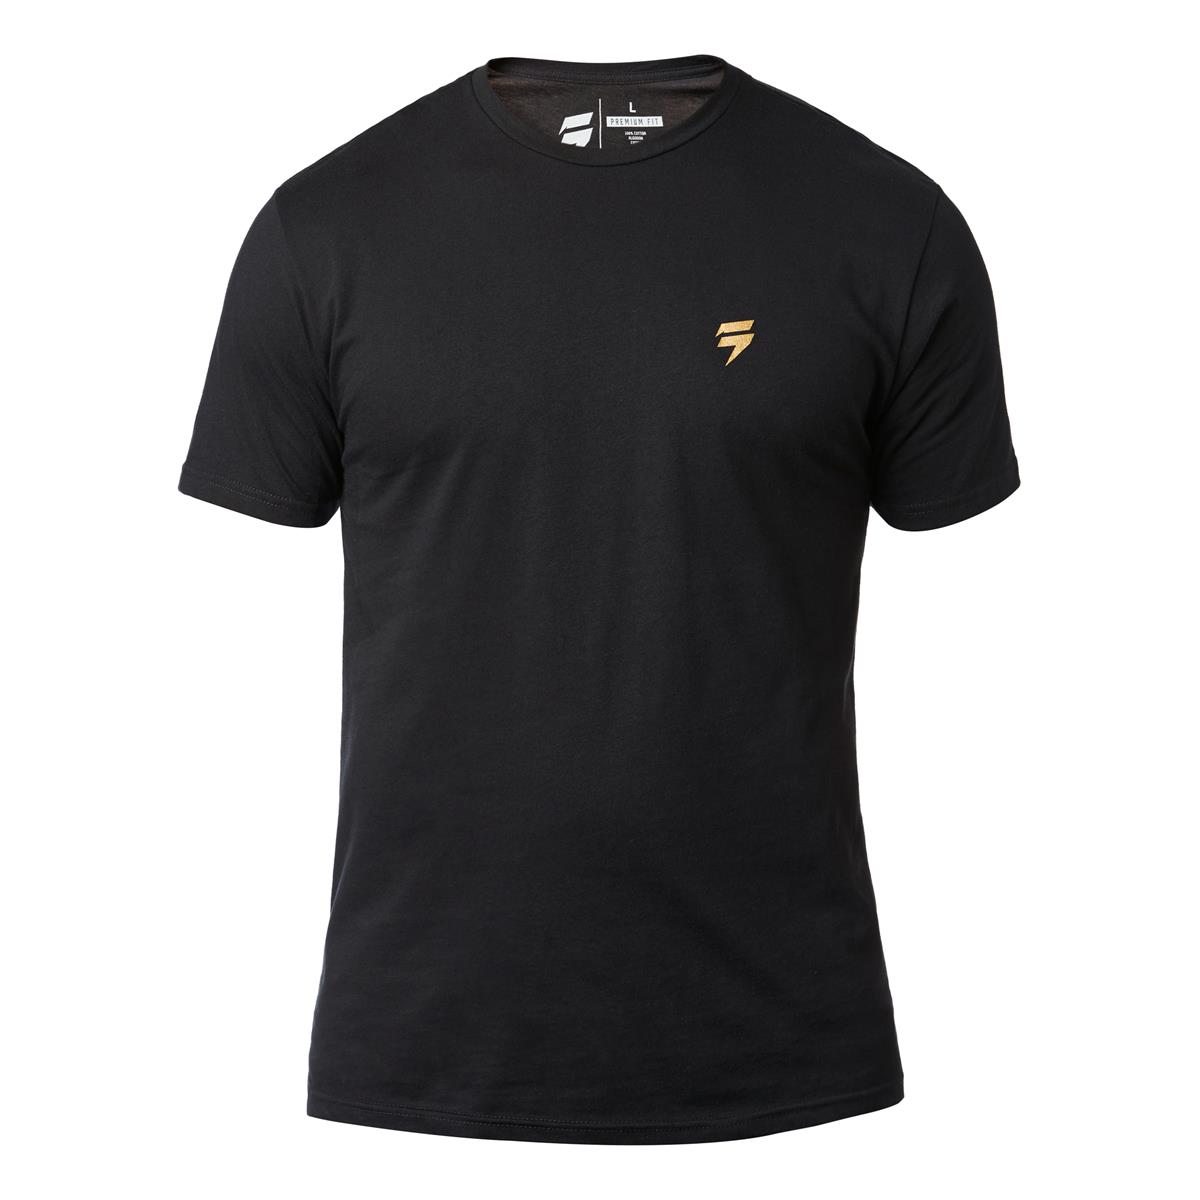 Shift T-Shirt 3lack Label Copa Nero - Special Edition Muerte